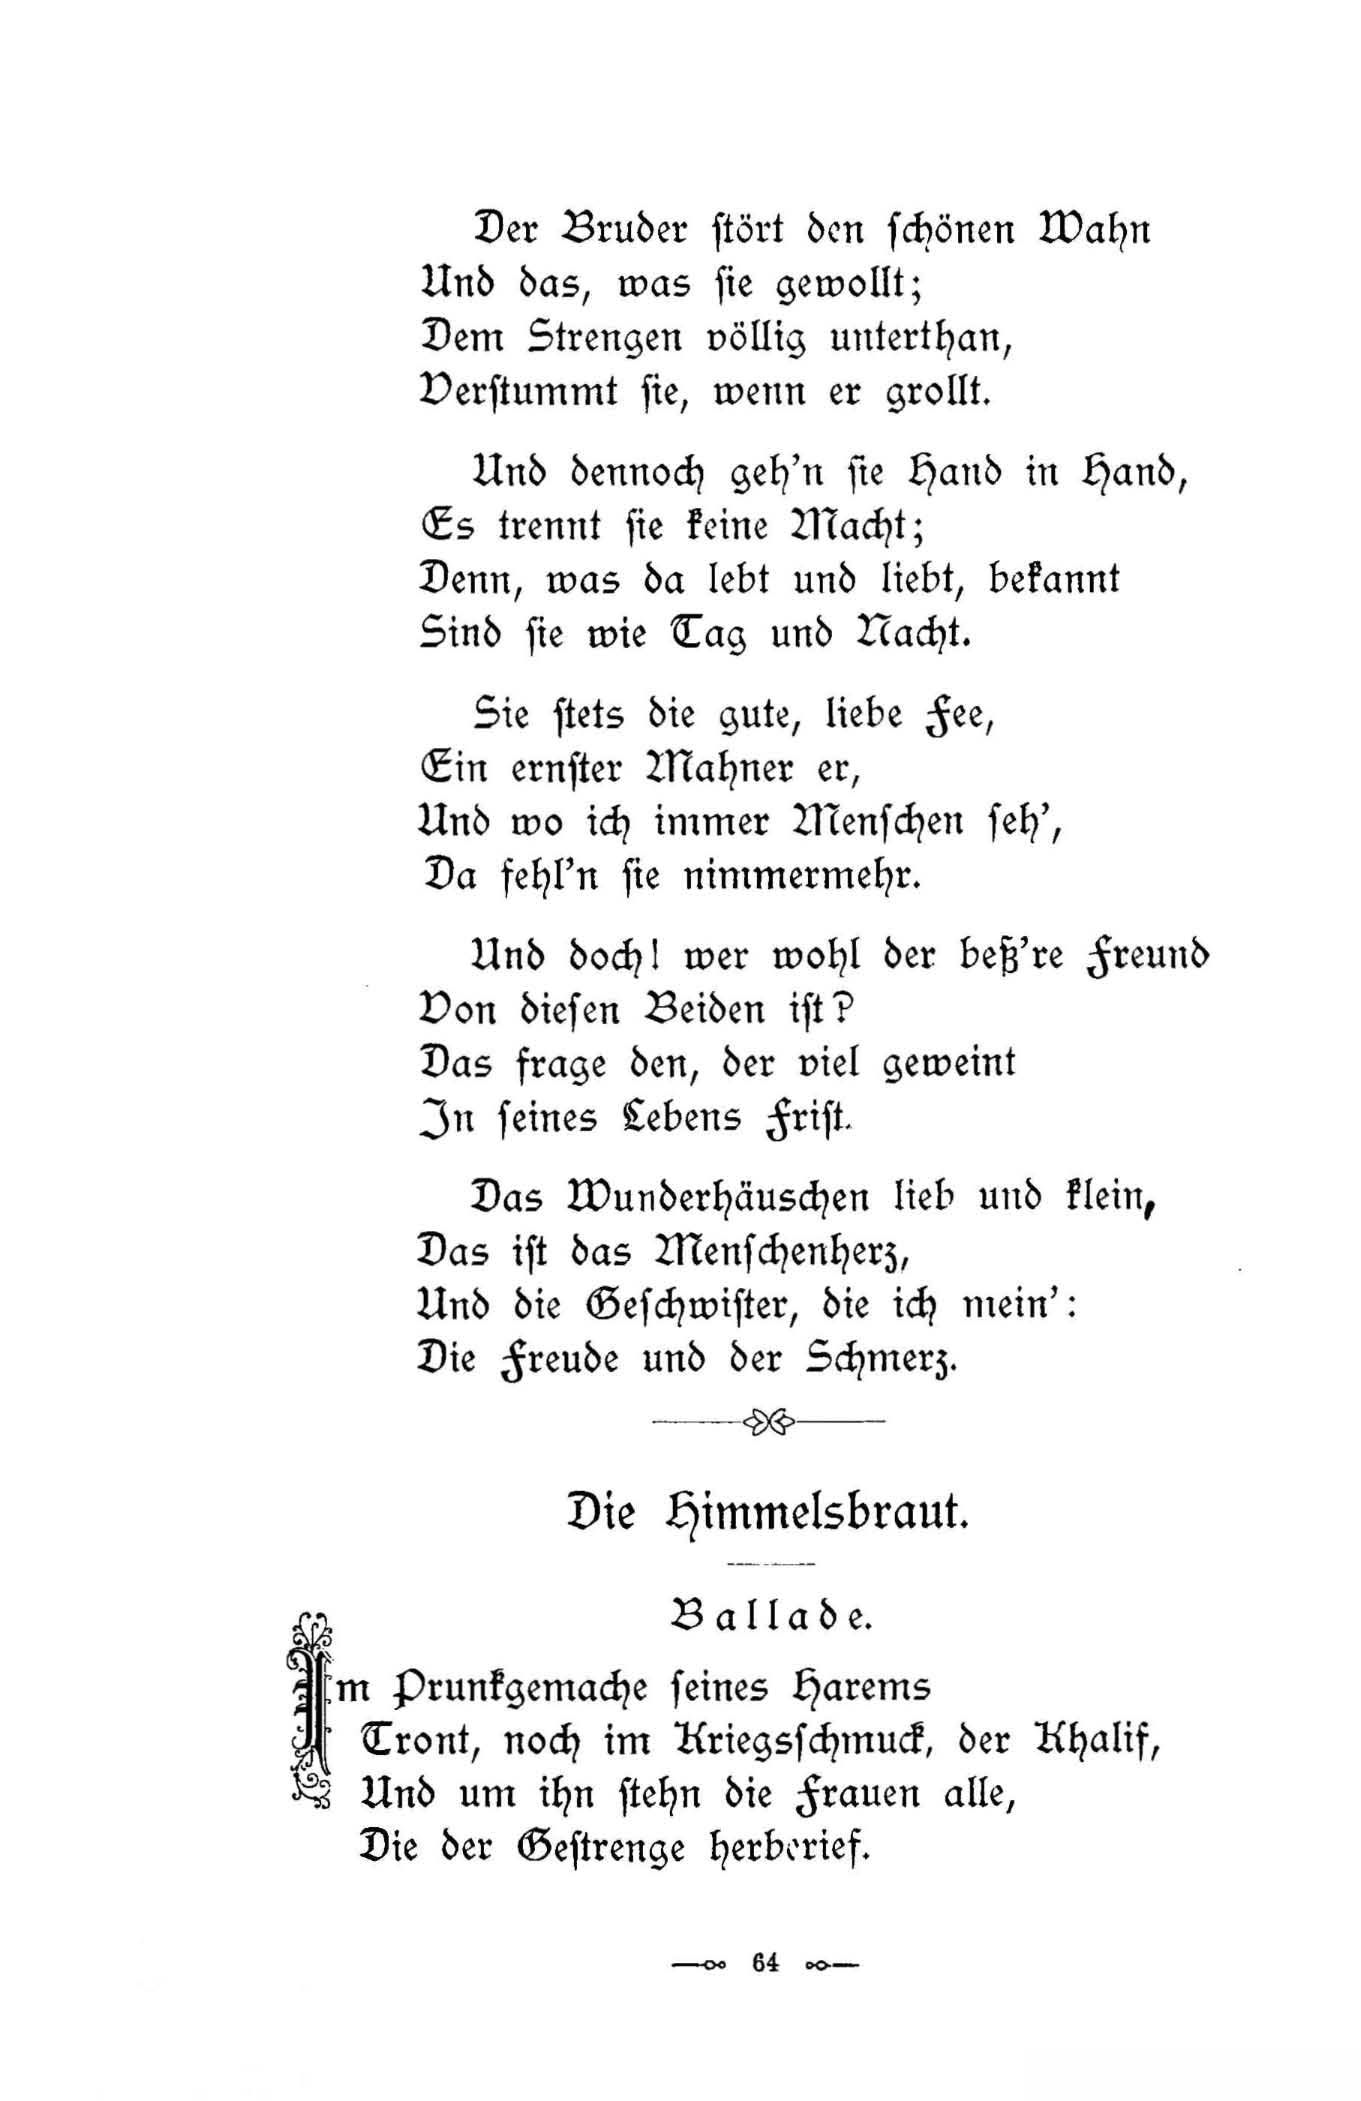 Die Himmelsbraut (1896) | 1. (64) Основной текст